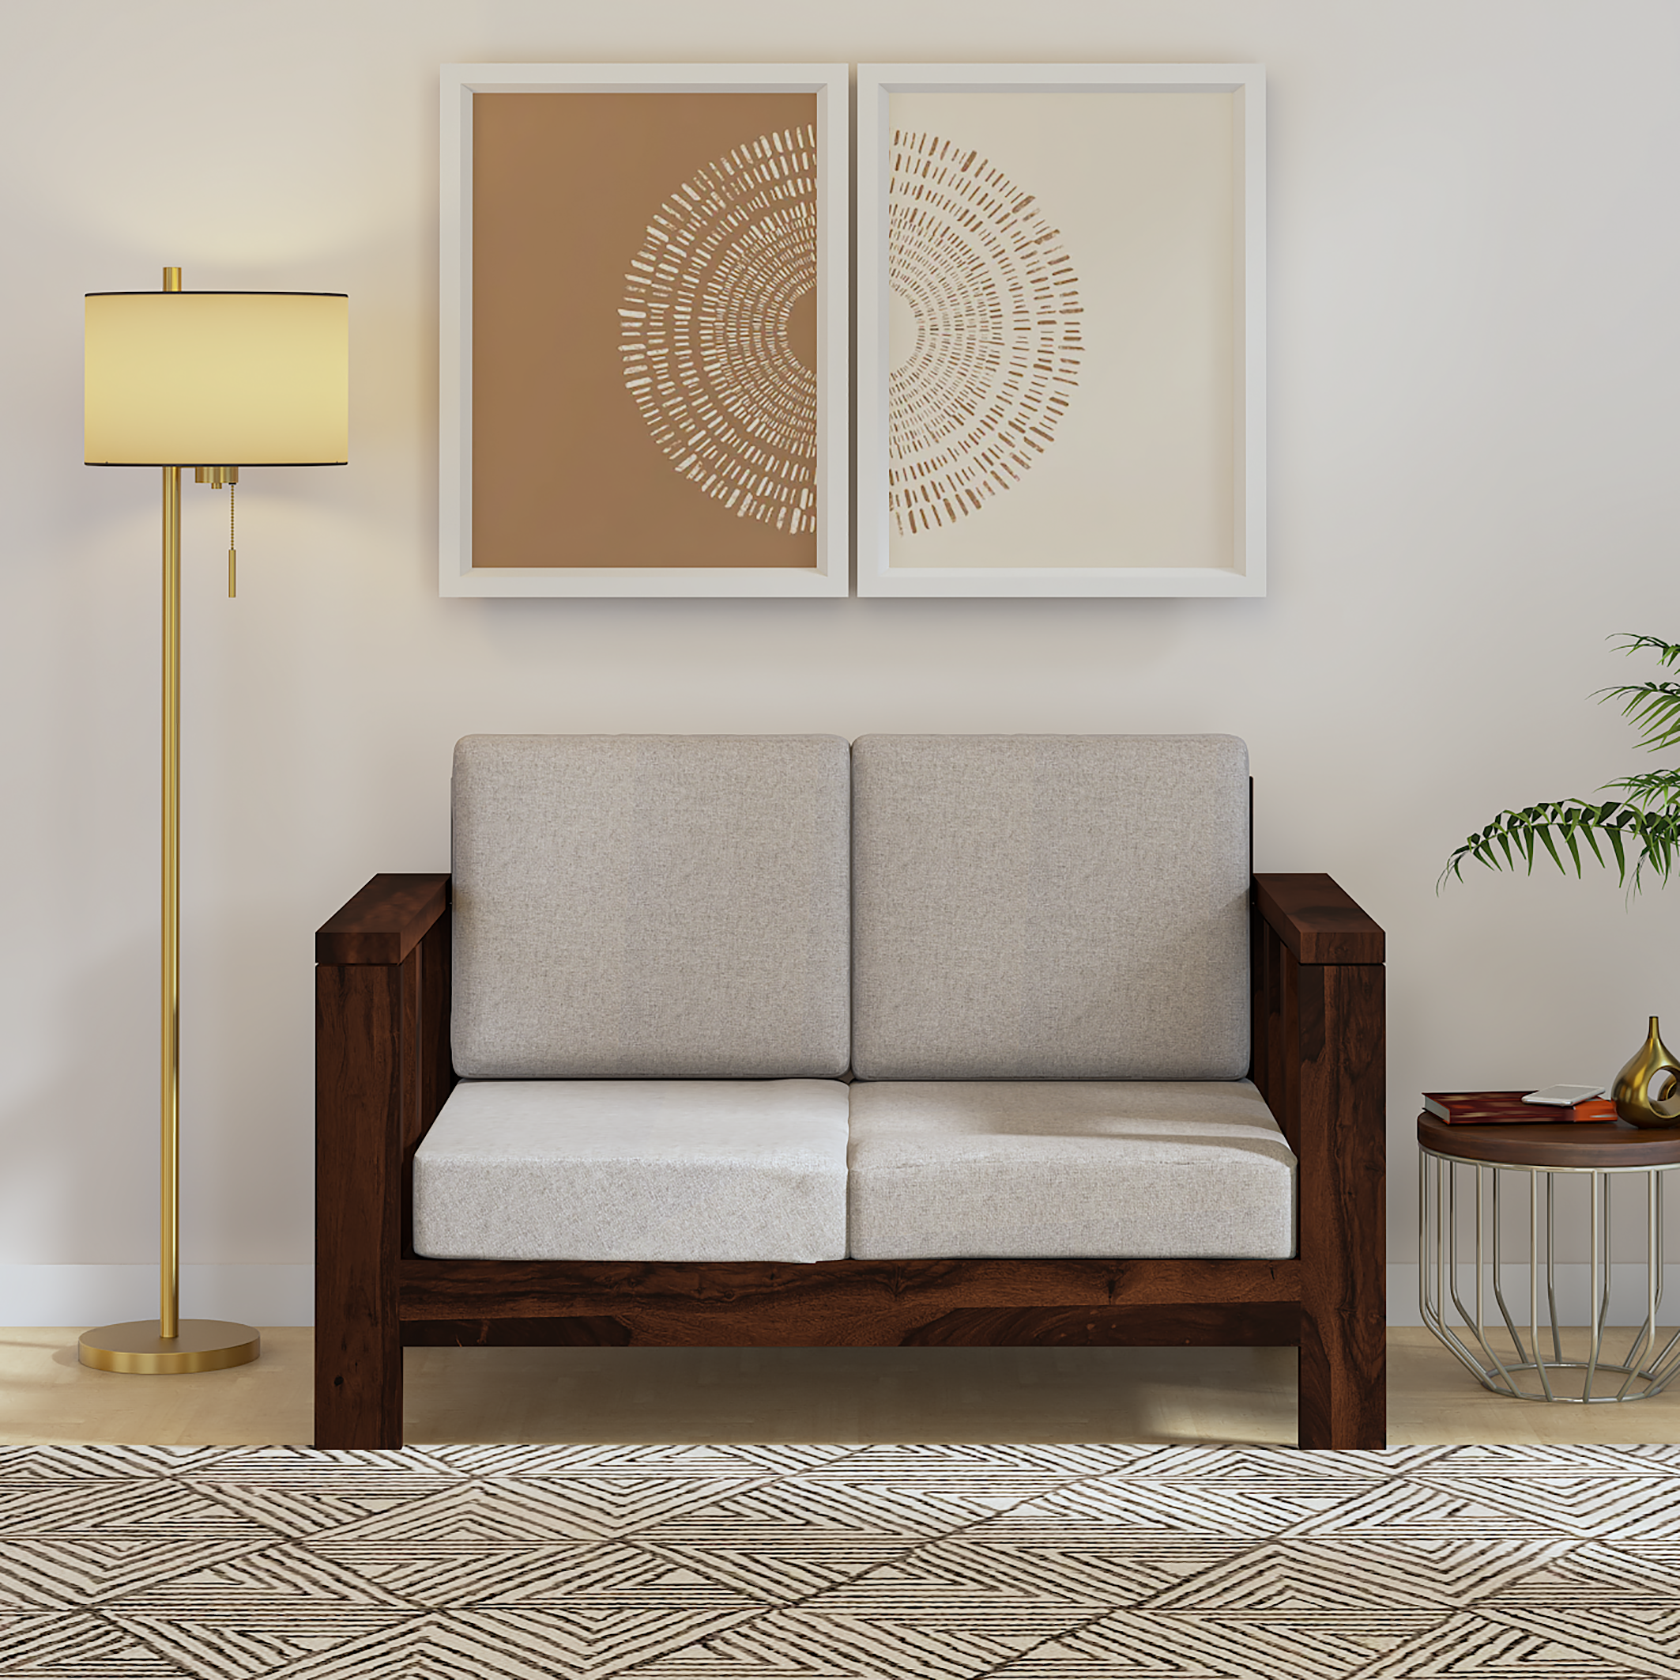 Tranquilcouch Sheesham Wood Sofa In Dark Walnut Color